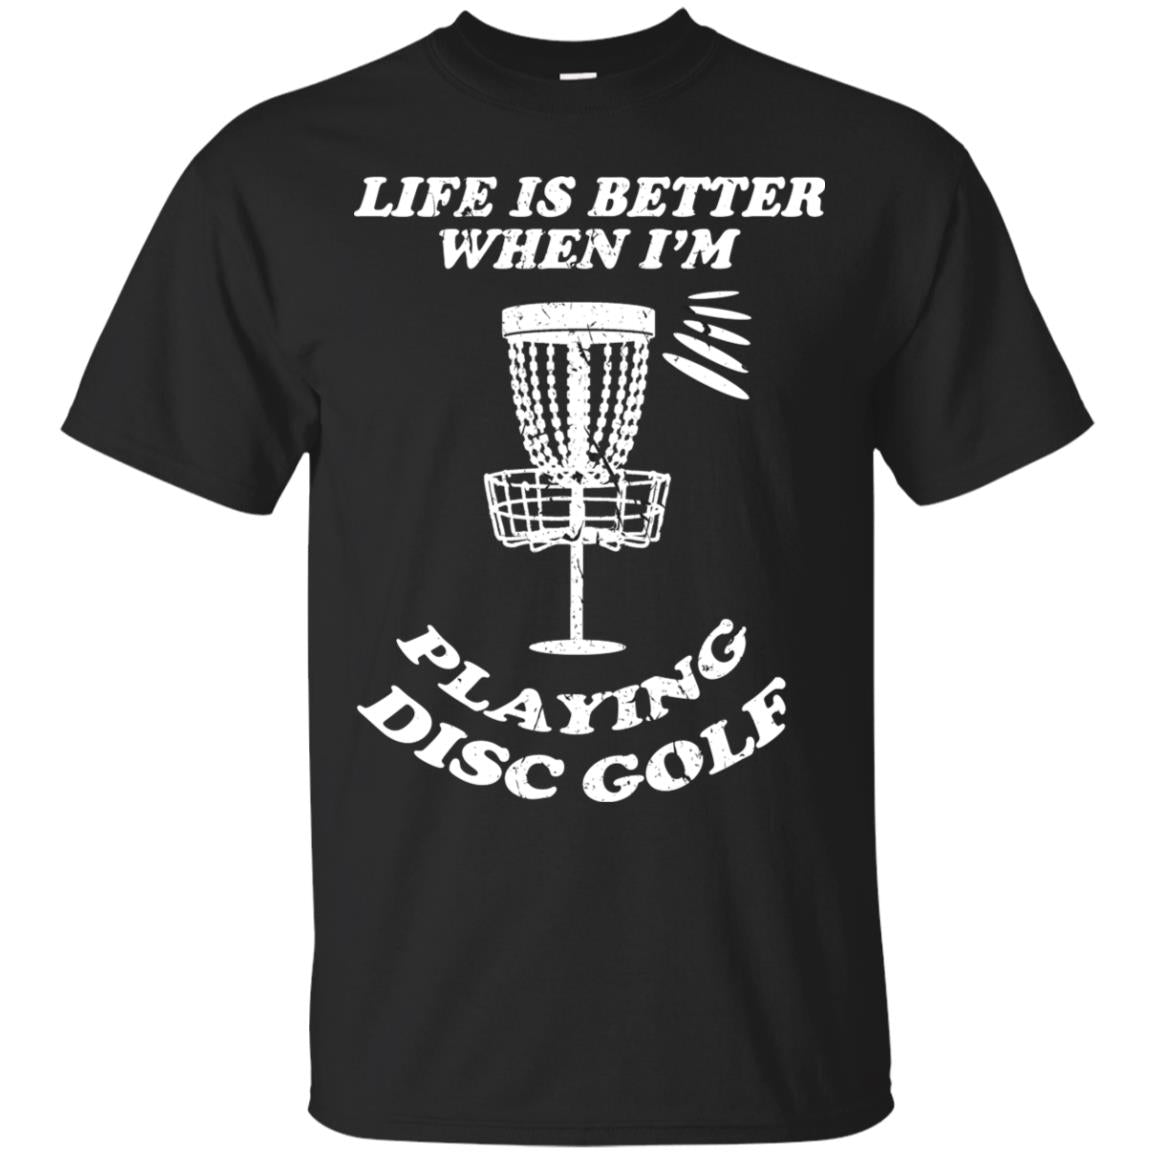 Life Is Better When I'm Playing Dics Golf Shirt For Mens Or WomensG200 Gildan Ultra Cotton T-Shirt